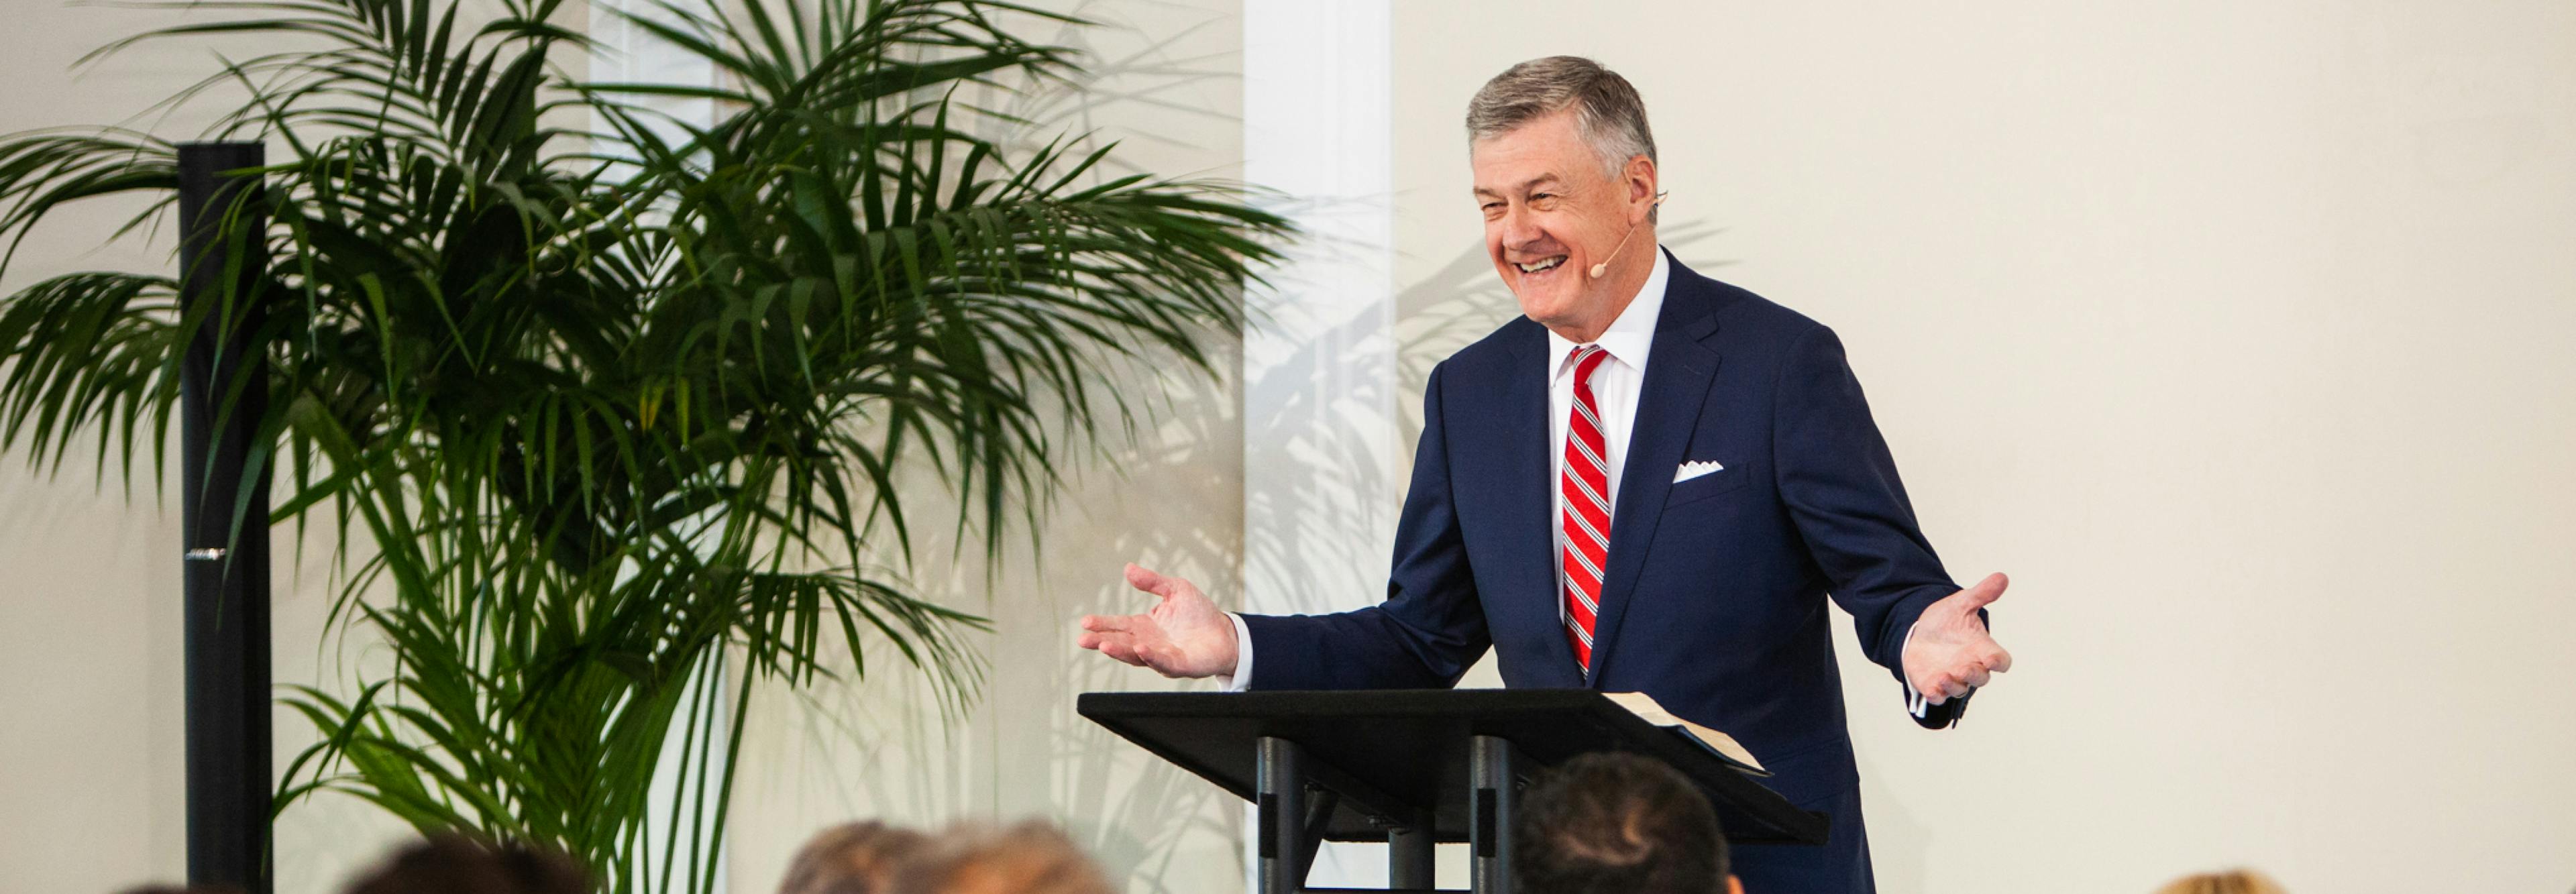 Steven Lawson speaking at Reformation Bible College